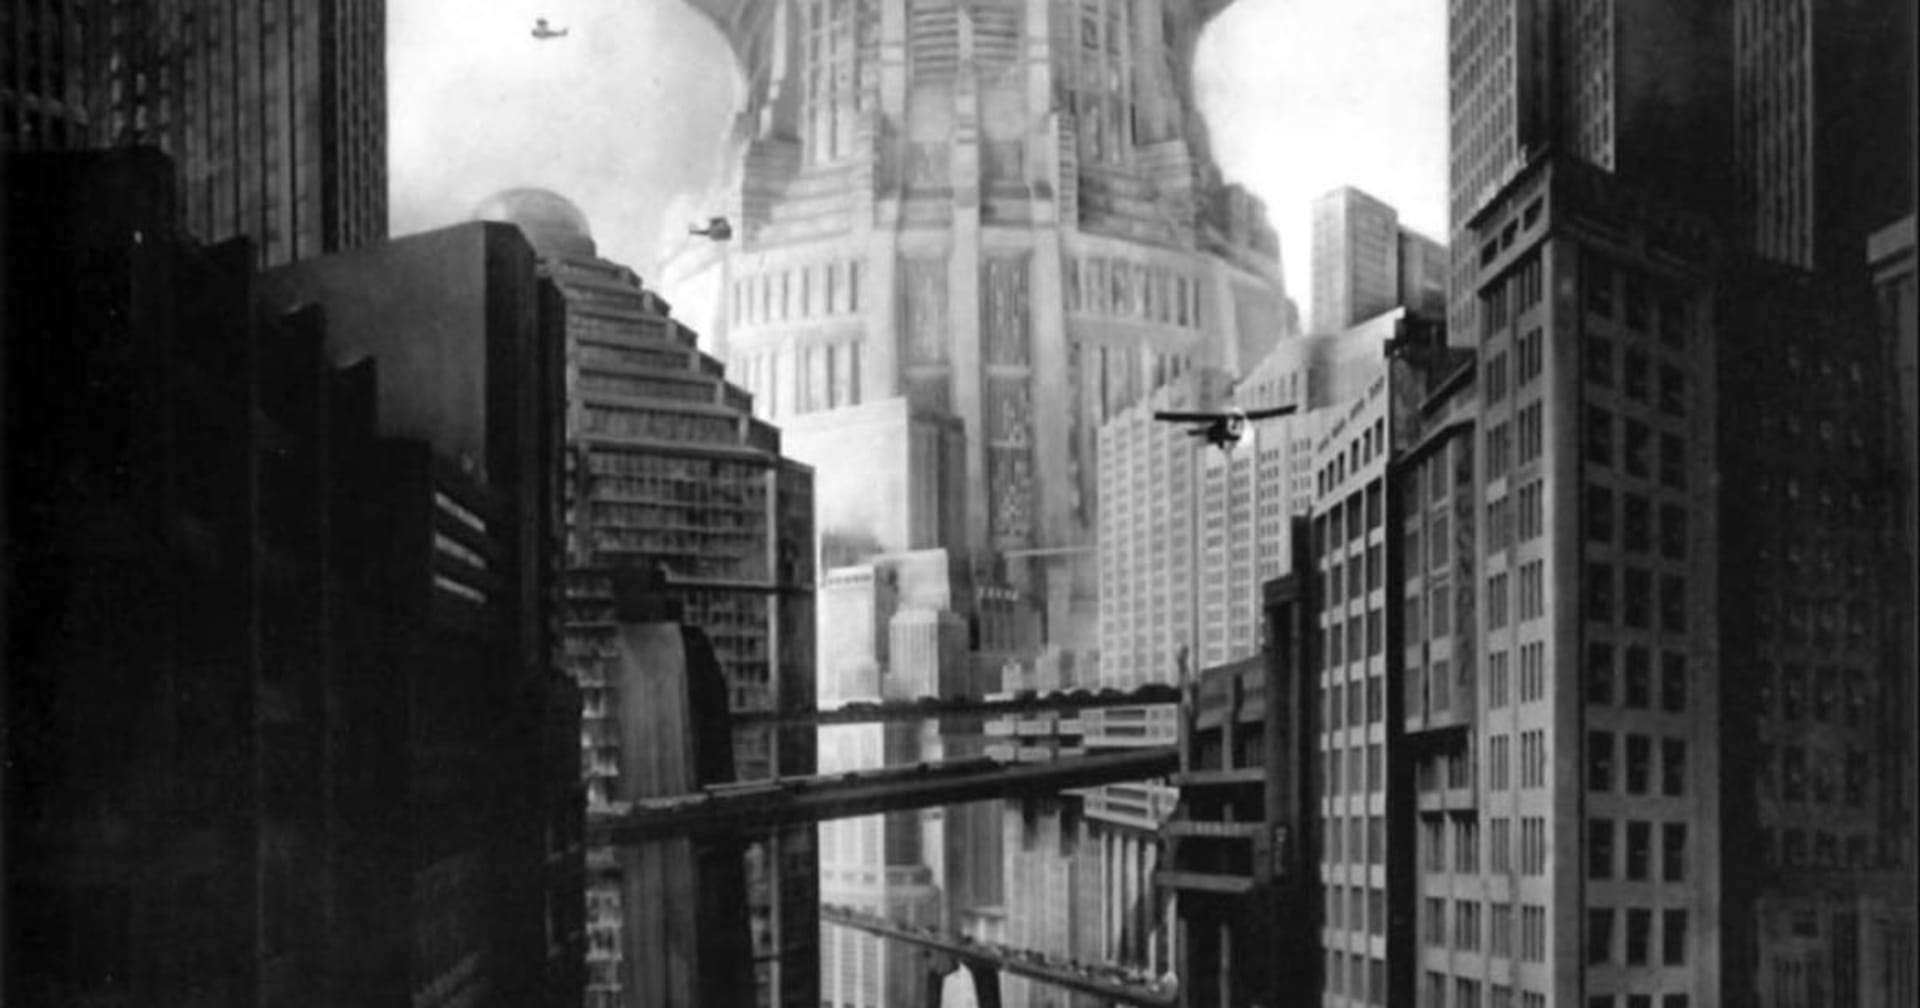 Filmová klasika Metropolis, která inspirovala i vznik nového filmu Megalopolis